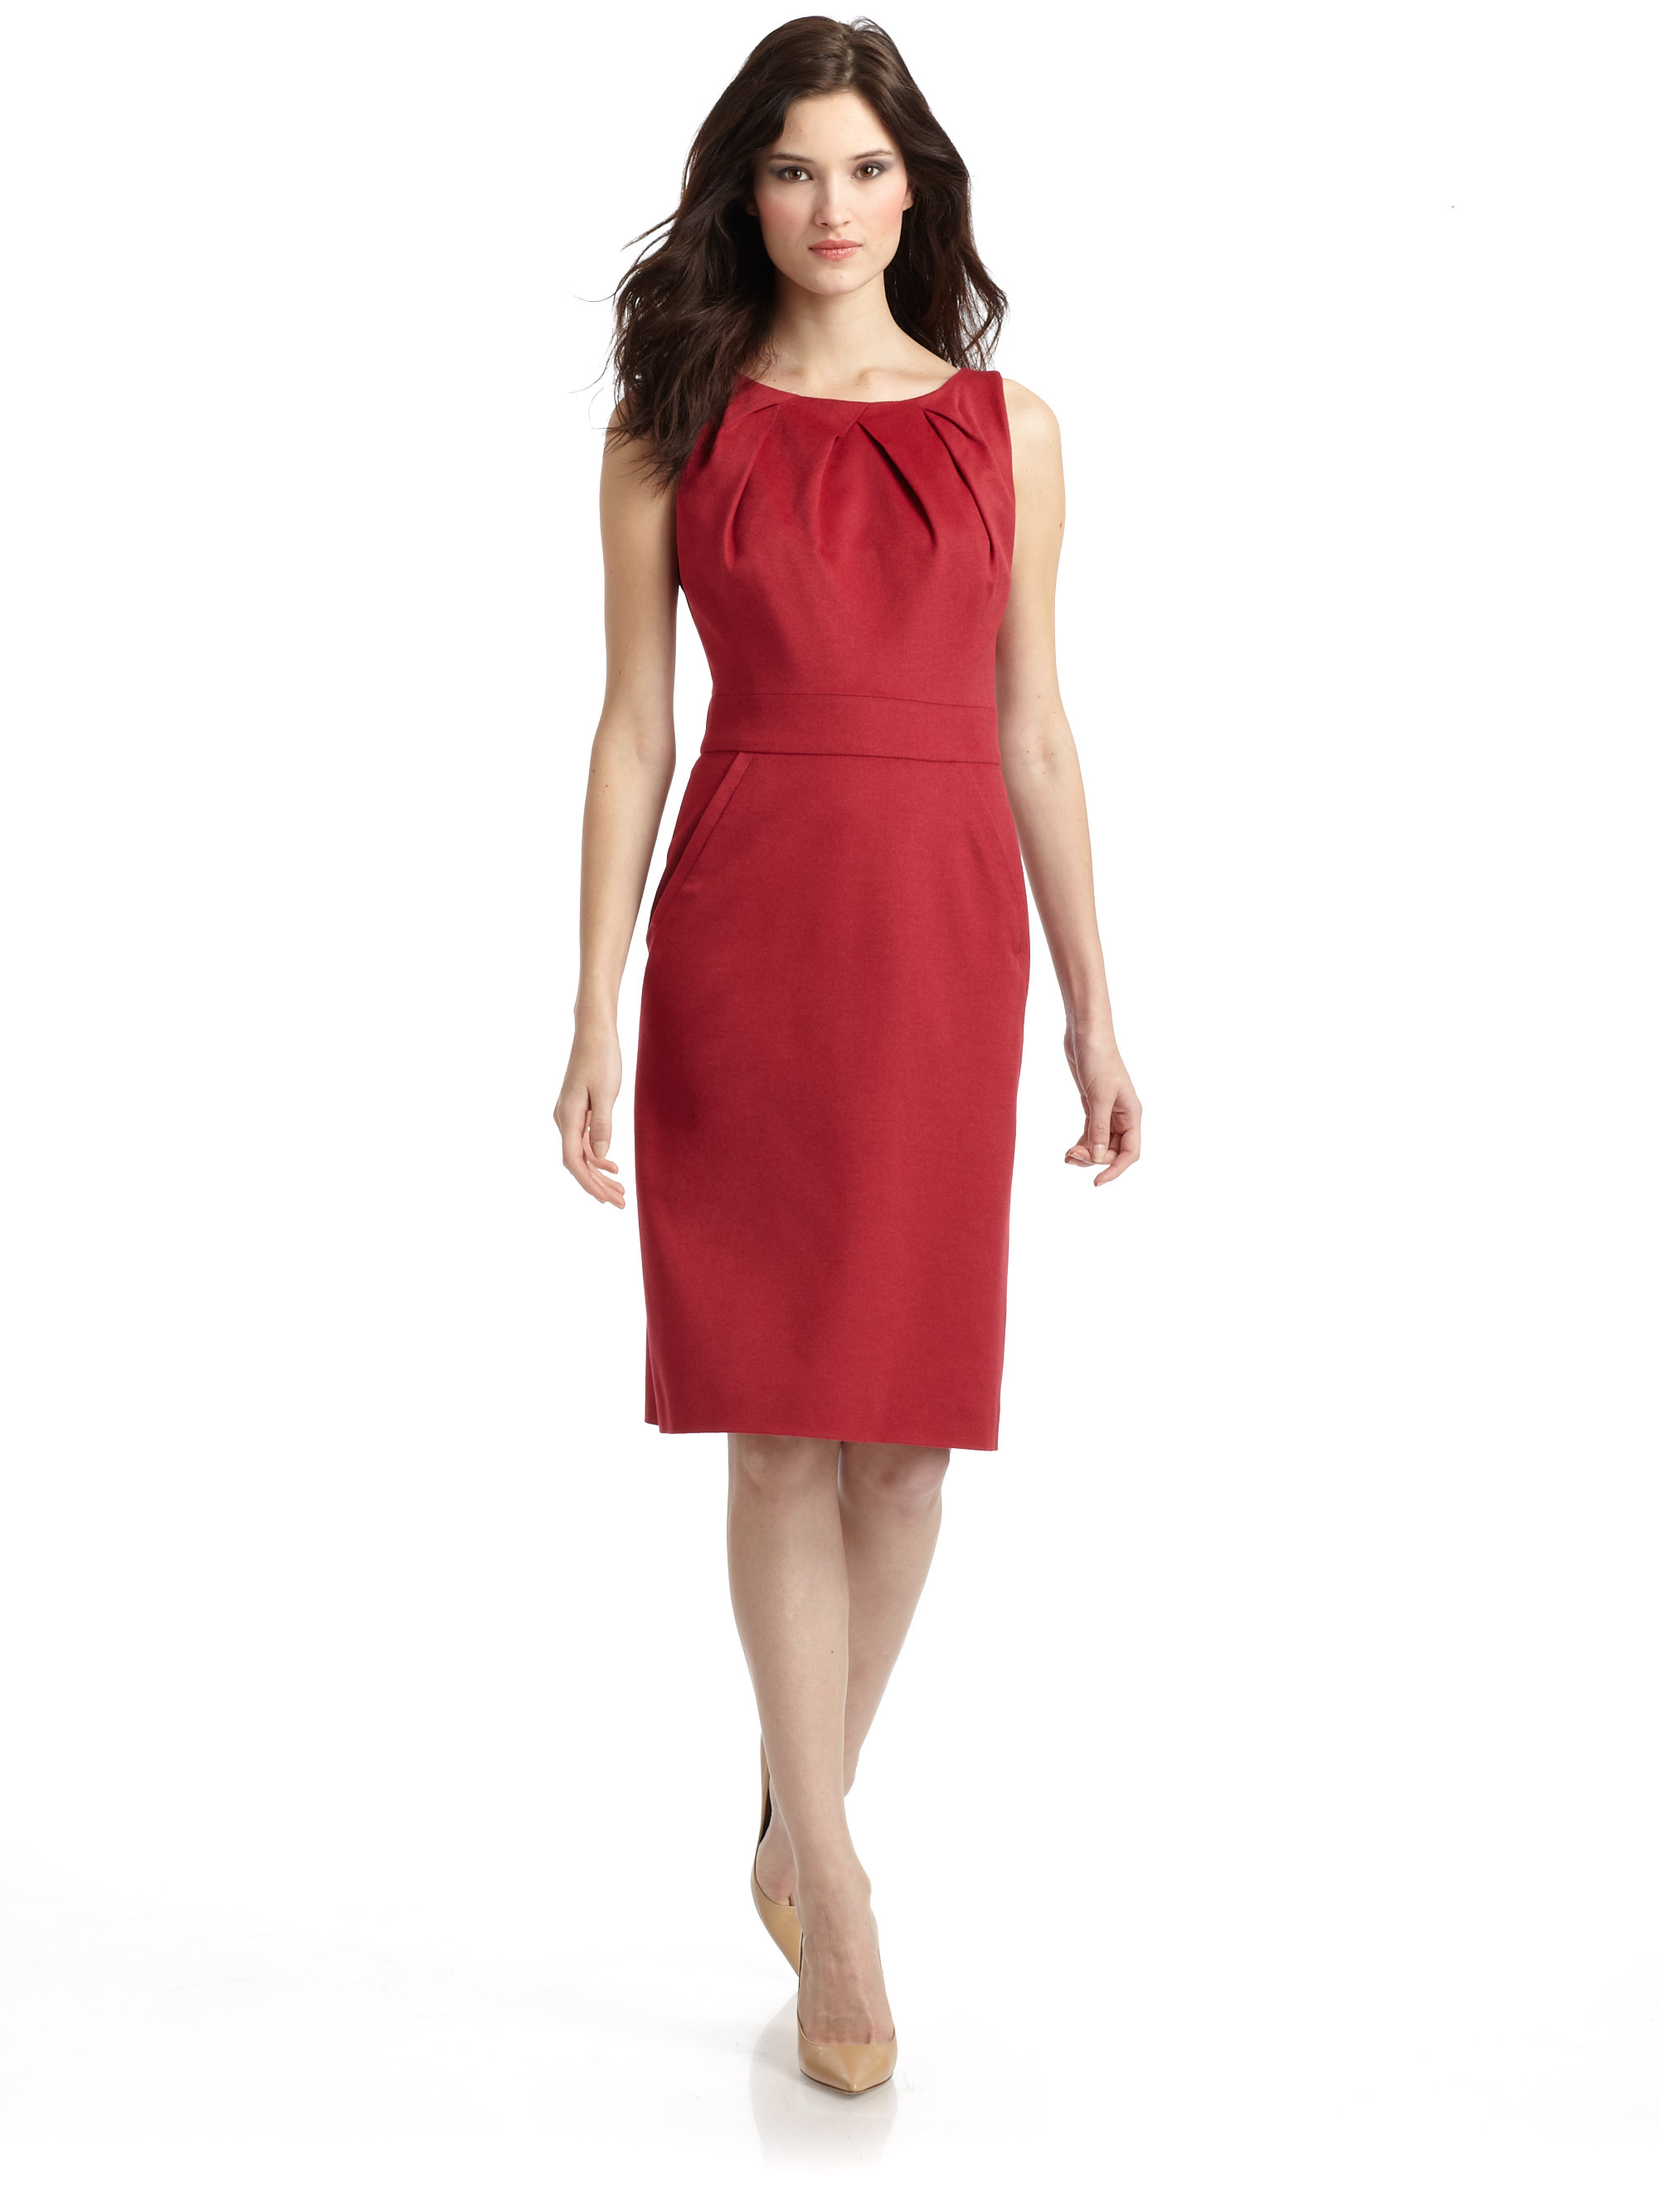 Lyst - Giorgio Armani Sleeveless Dress in Red